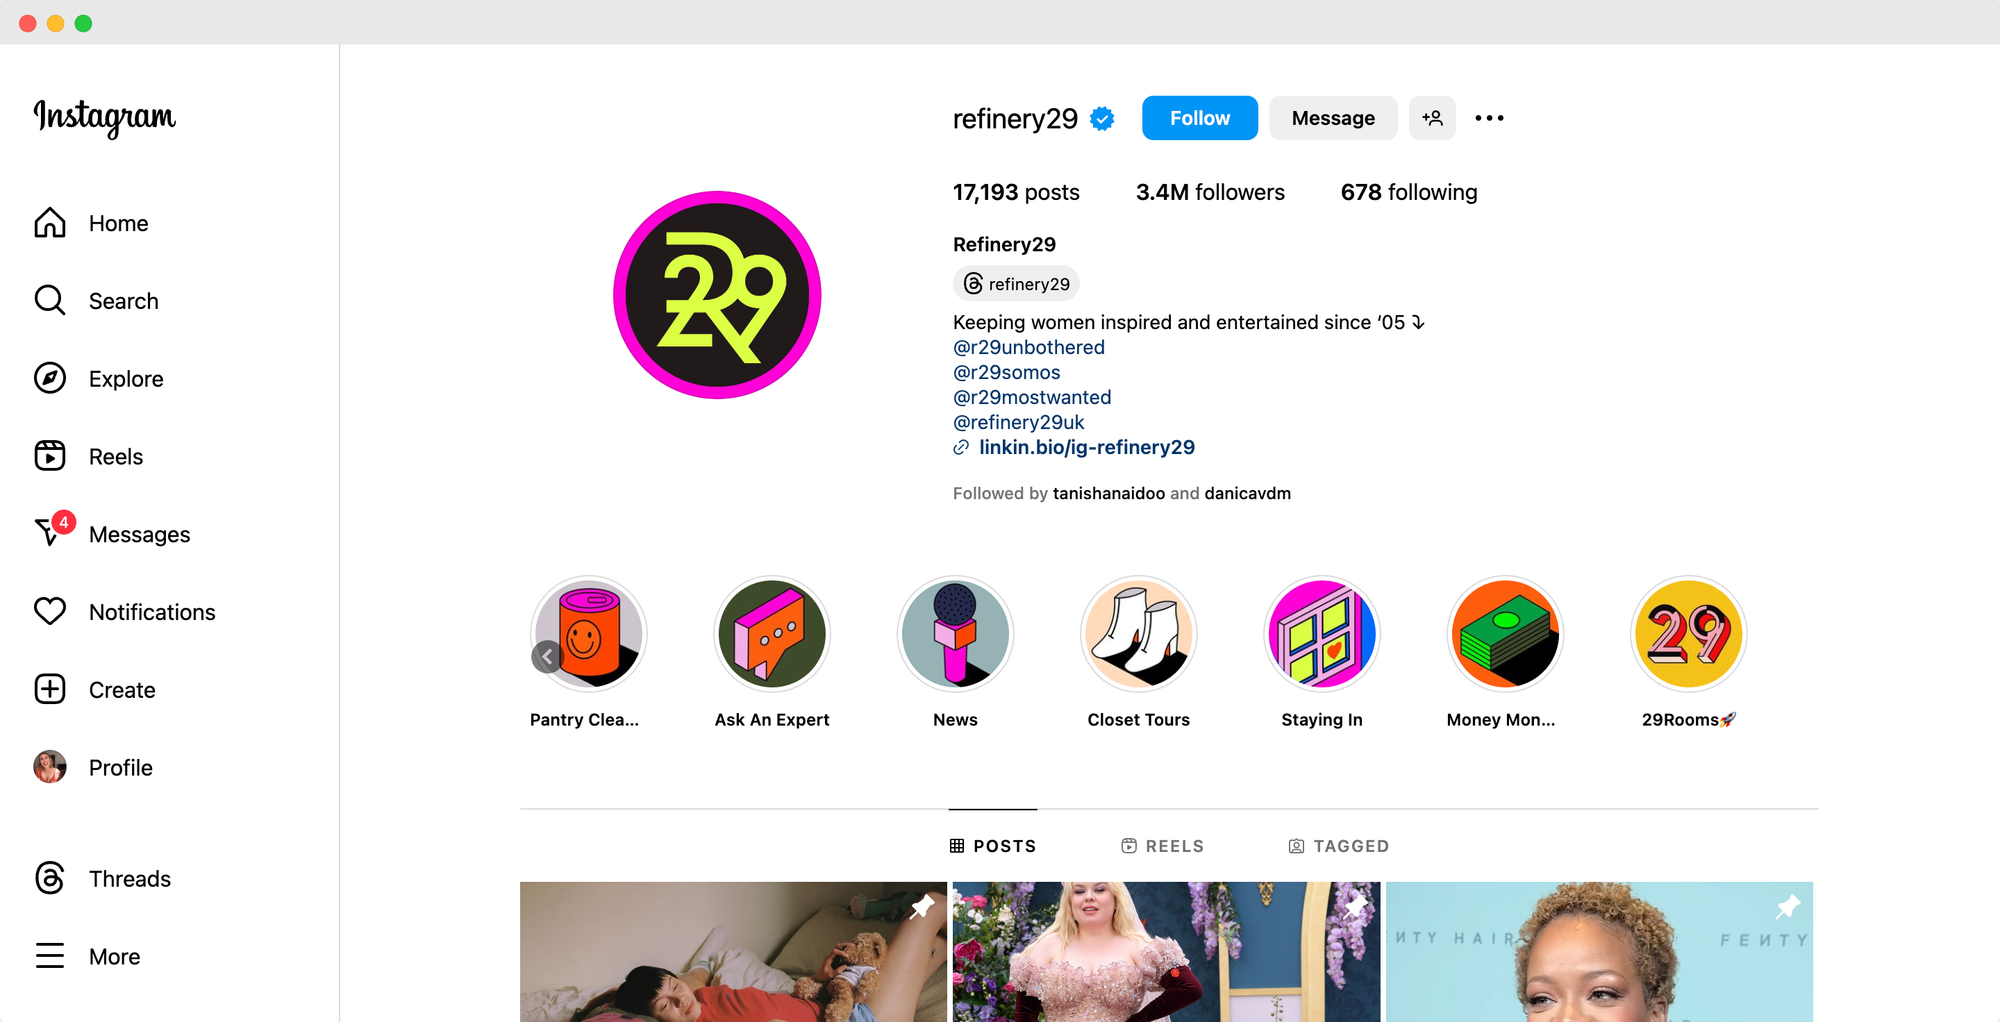 Refinery29's Instagram profile